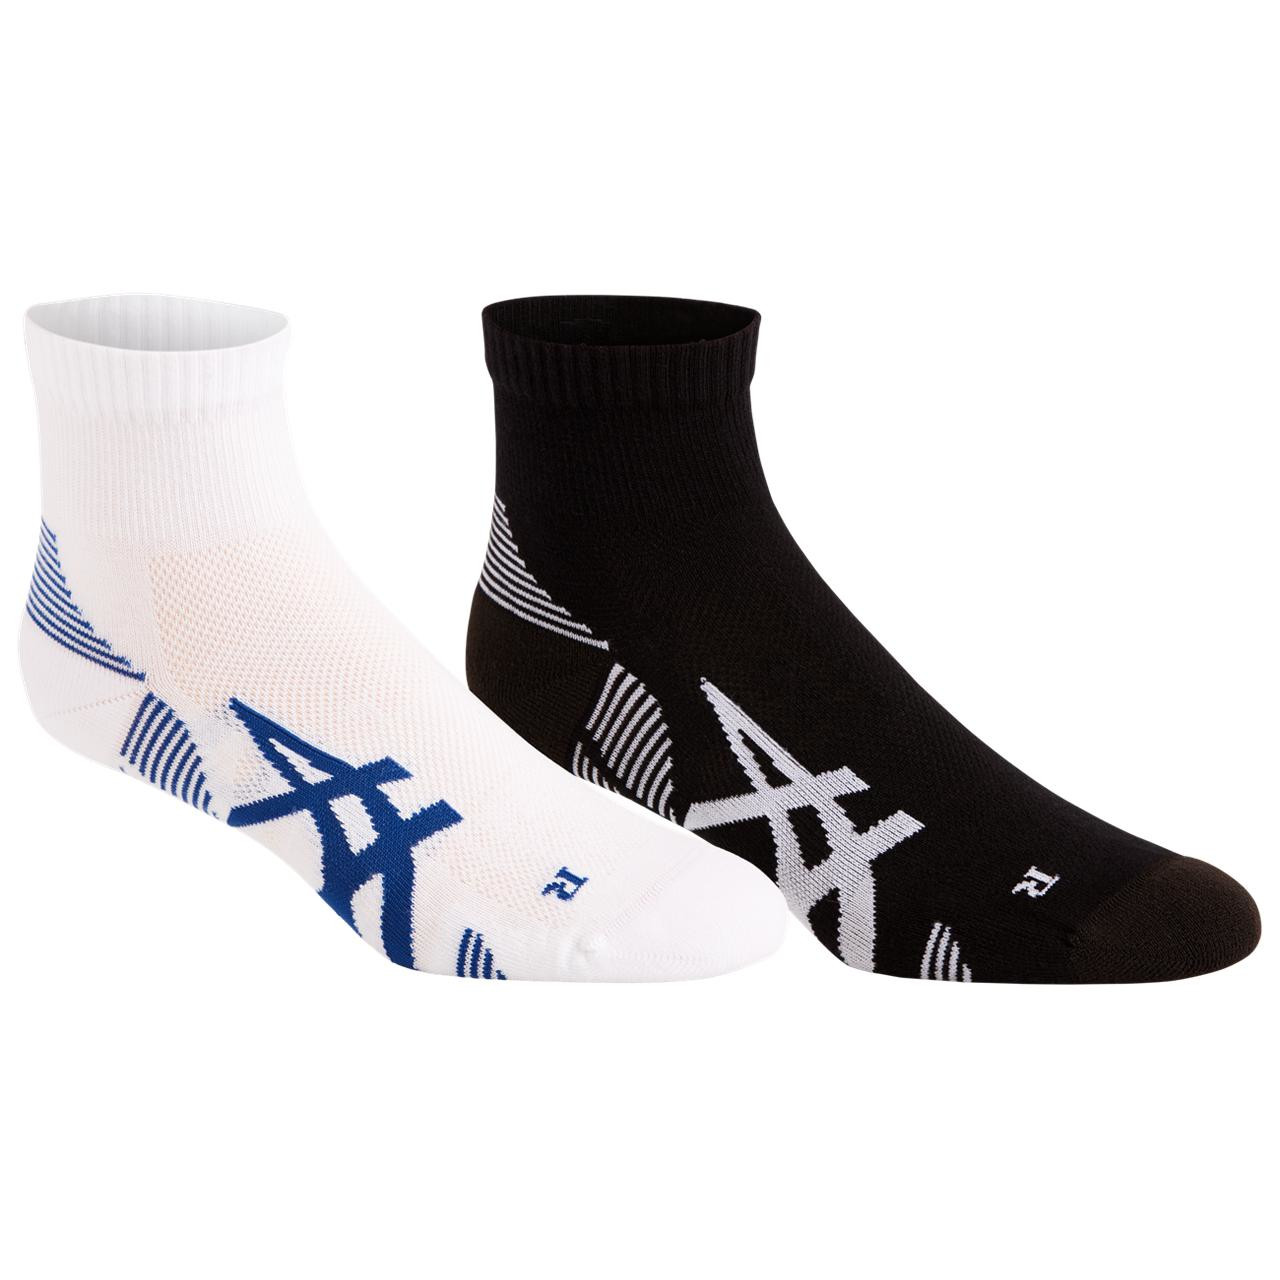 Picture of asics 2PPK Cushioning Socks - 2 pack - performance black/brilliant white